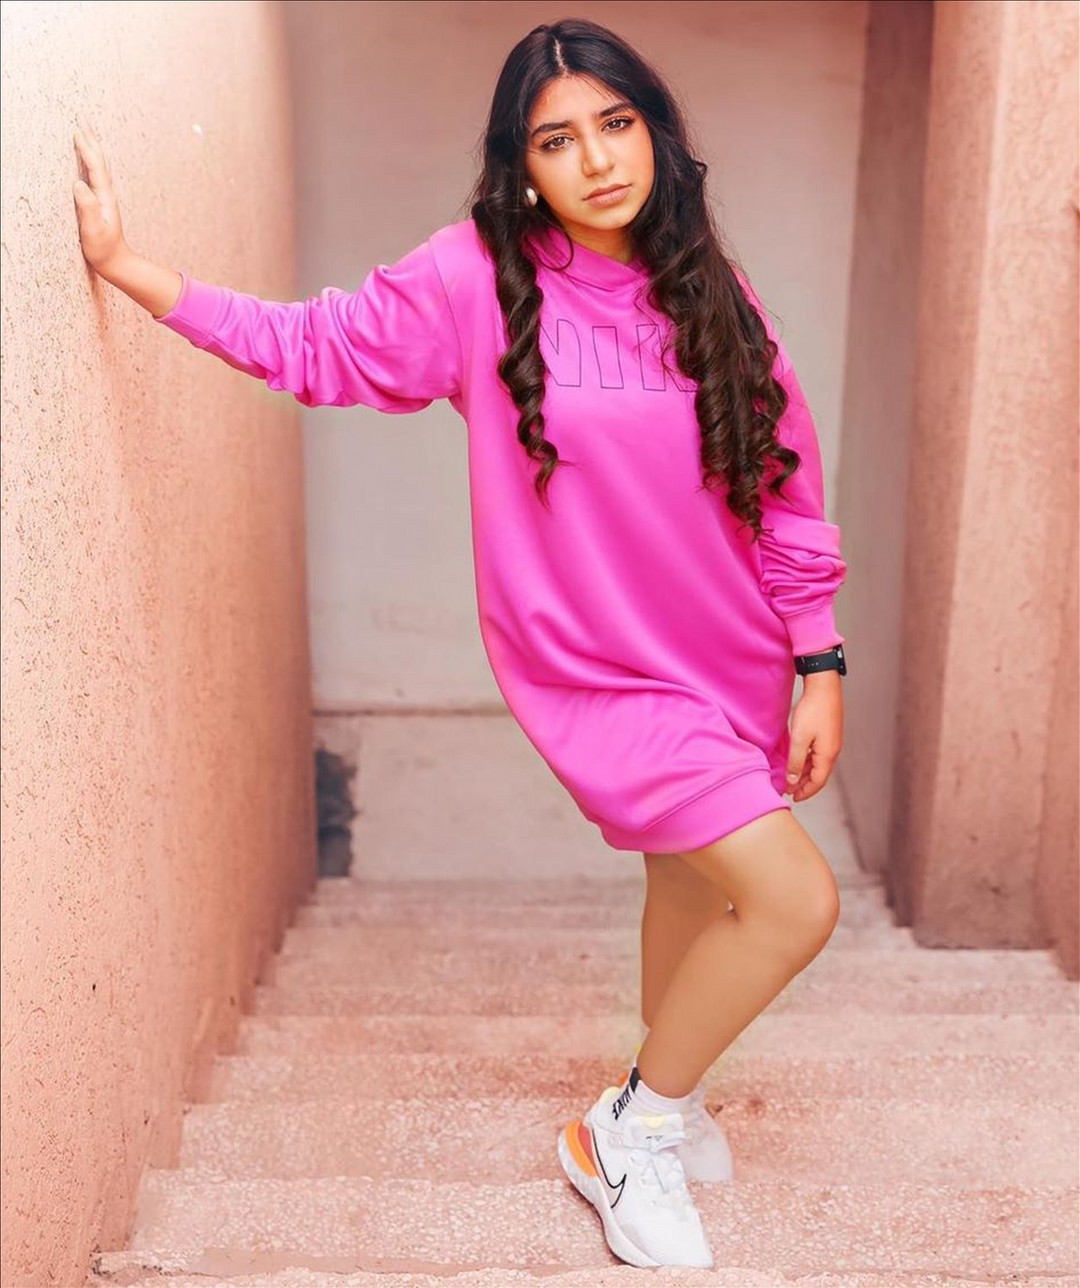 Ghrour Safar Pink Dress Teen Girl Photo 06